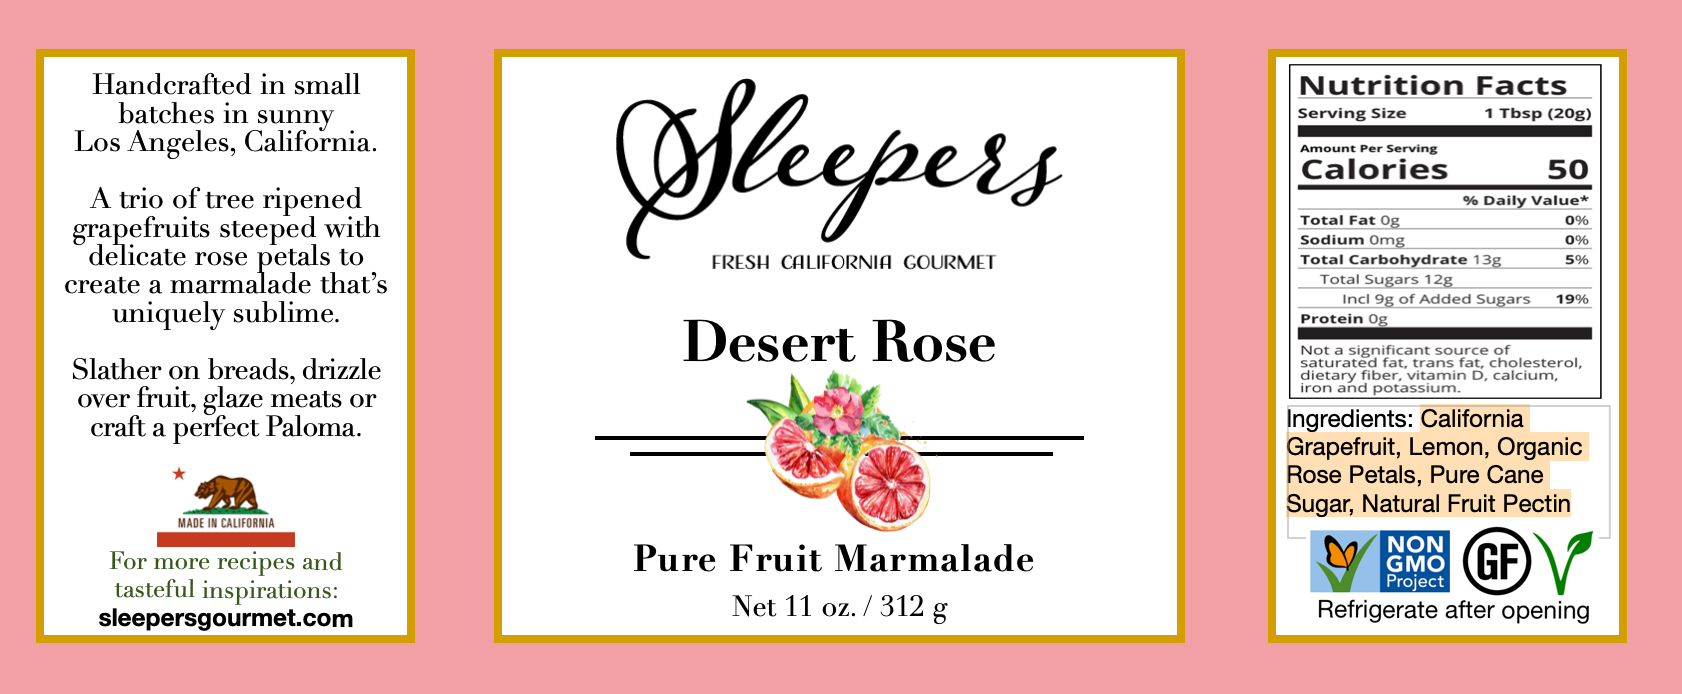 Desert Rose Grapefruit Marmalade Label